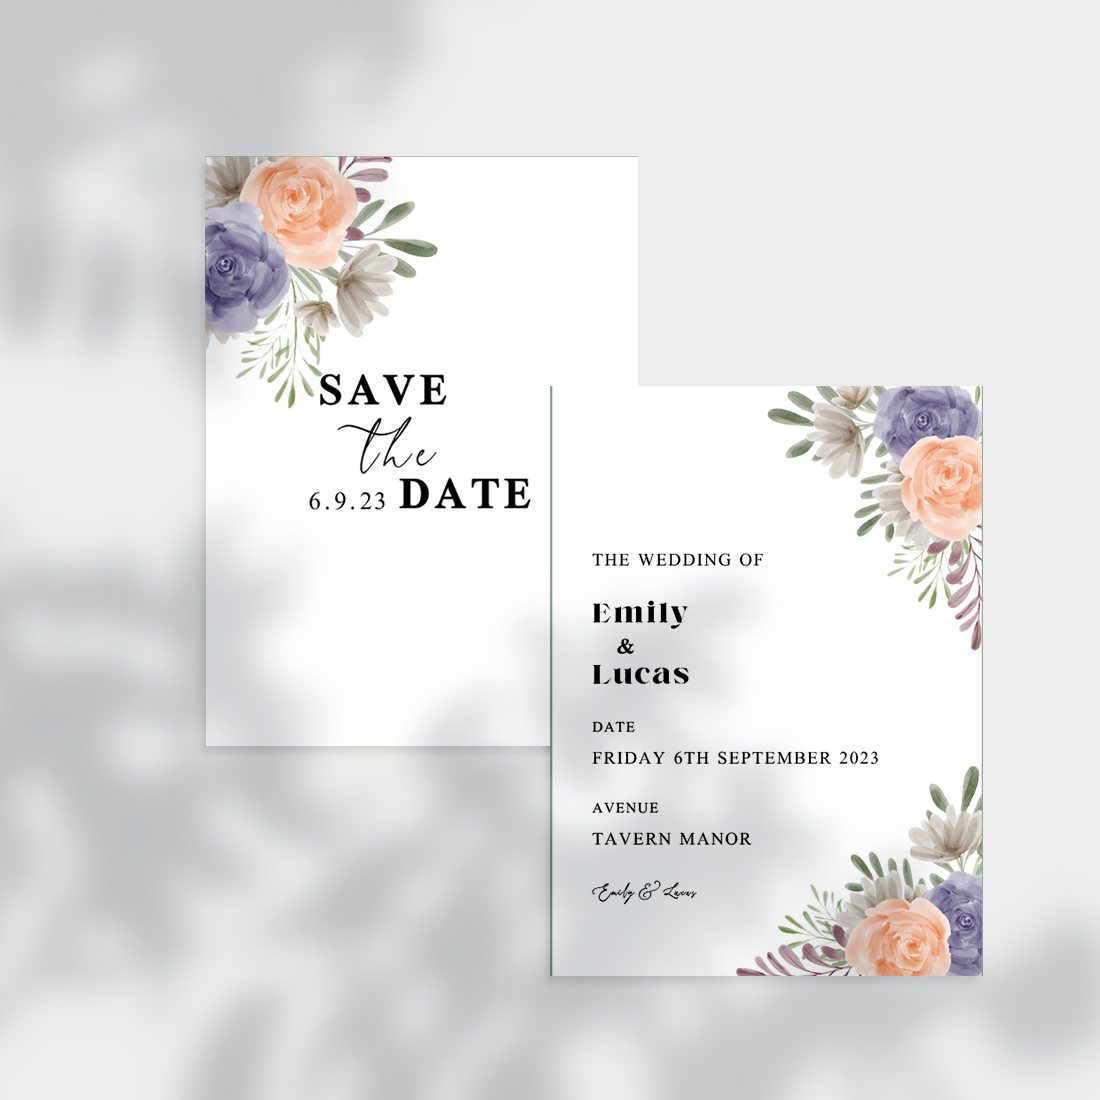 New Wedding Invitation Design Templates preview image.